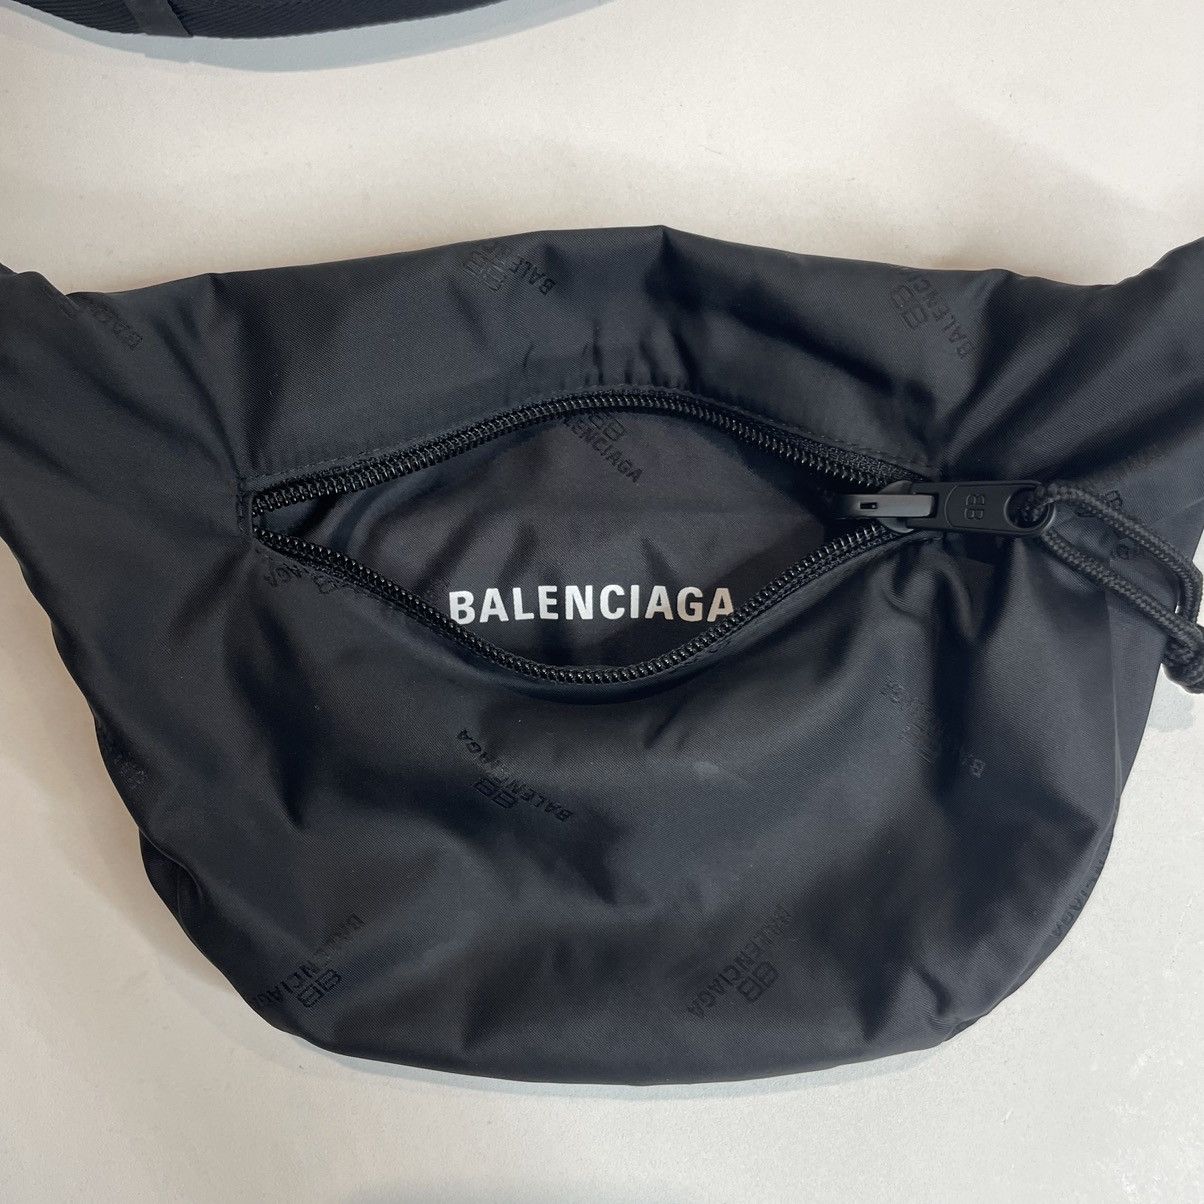 Balenciaga Balenciaga Beltpack Fanny Pack Size ONE SIZE - 4 Thumbnail